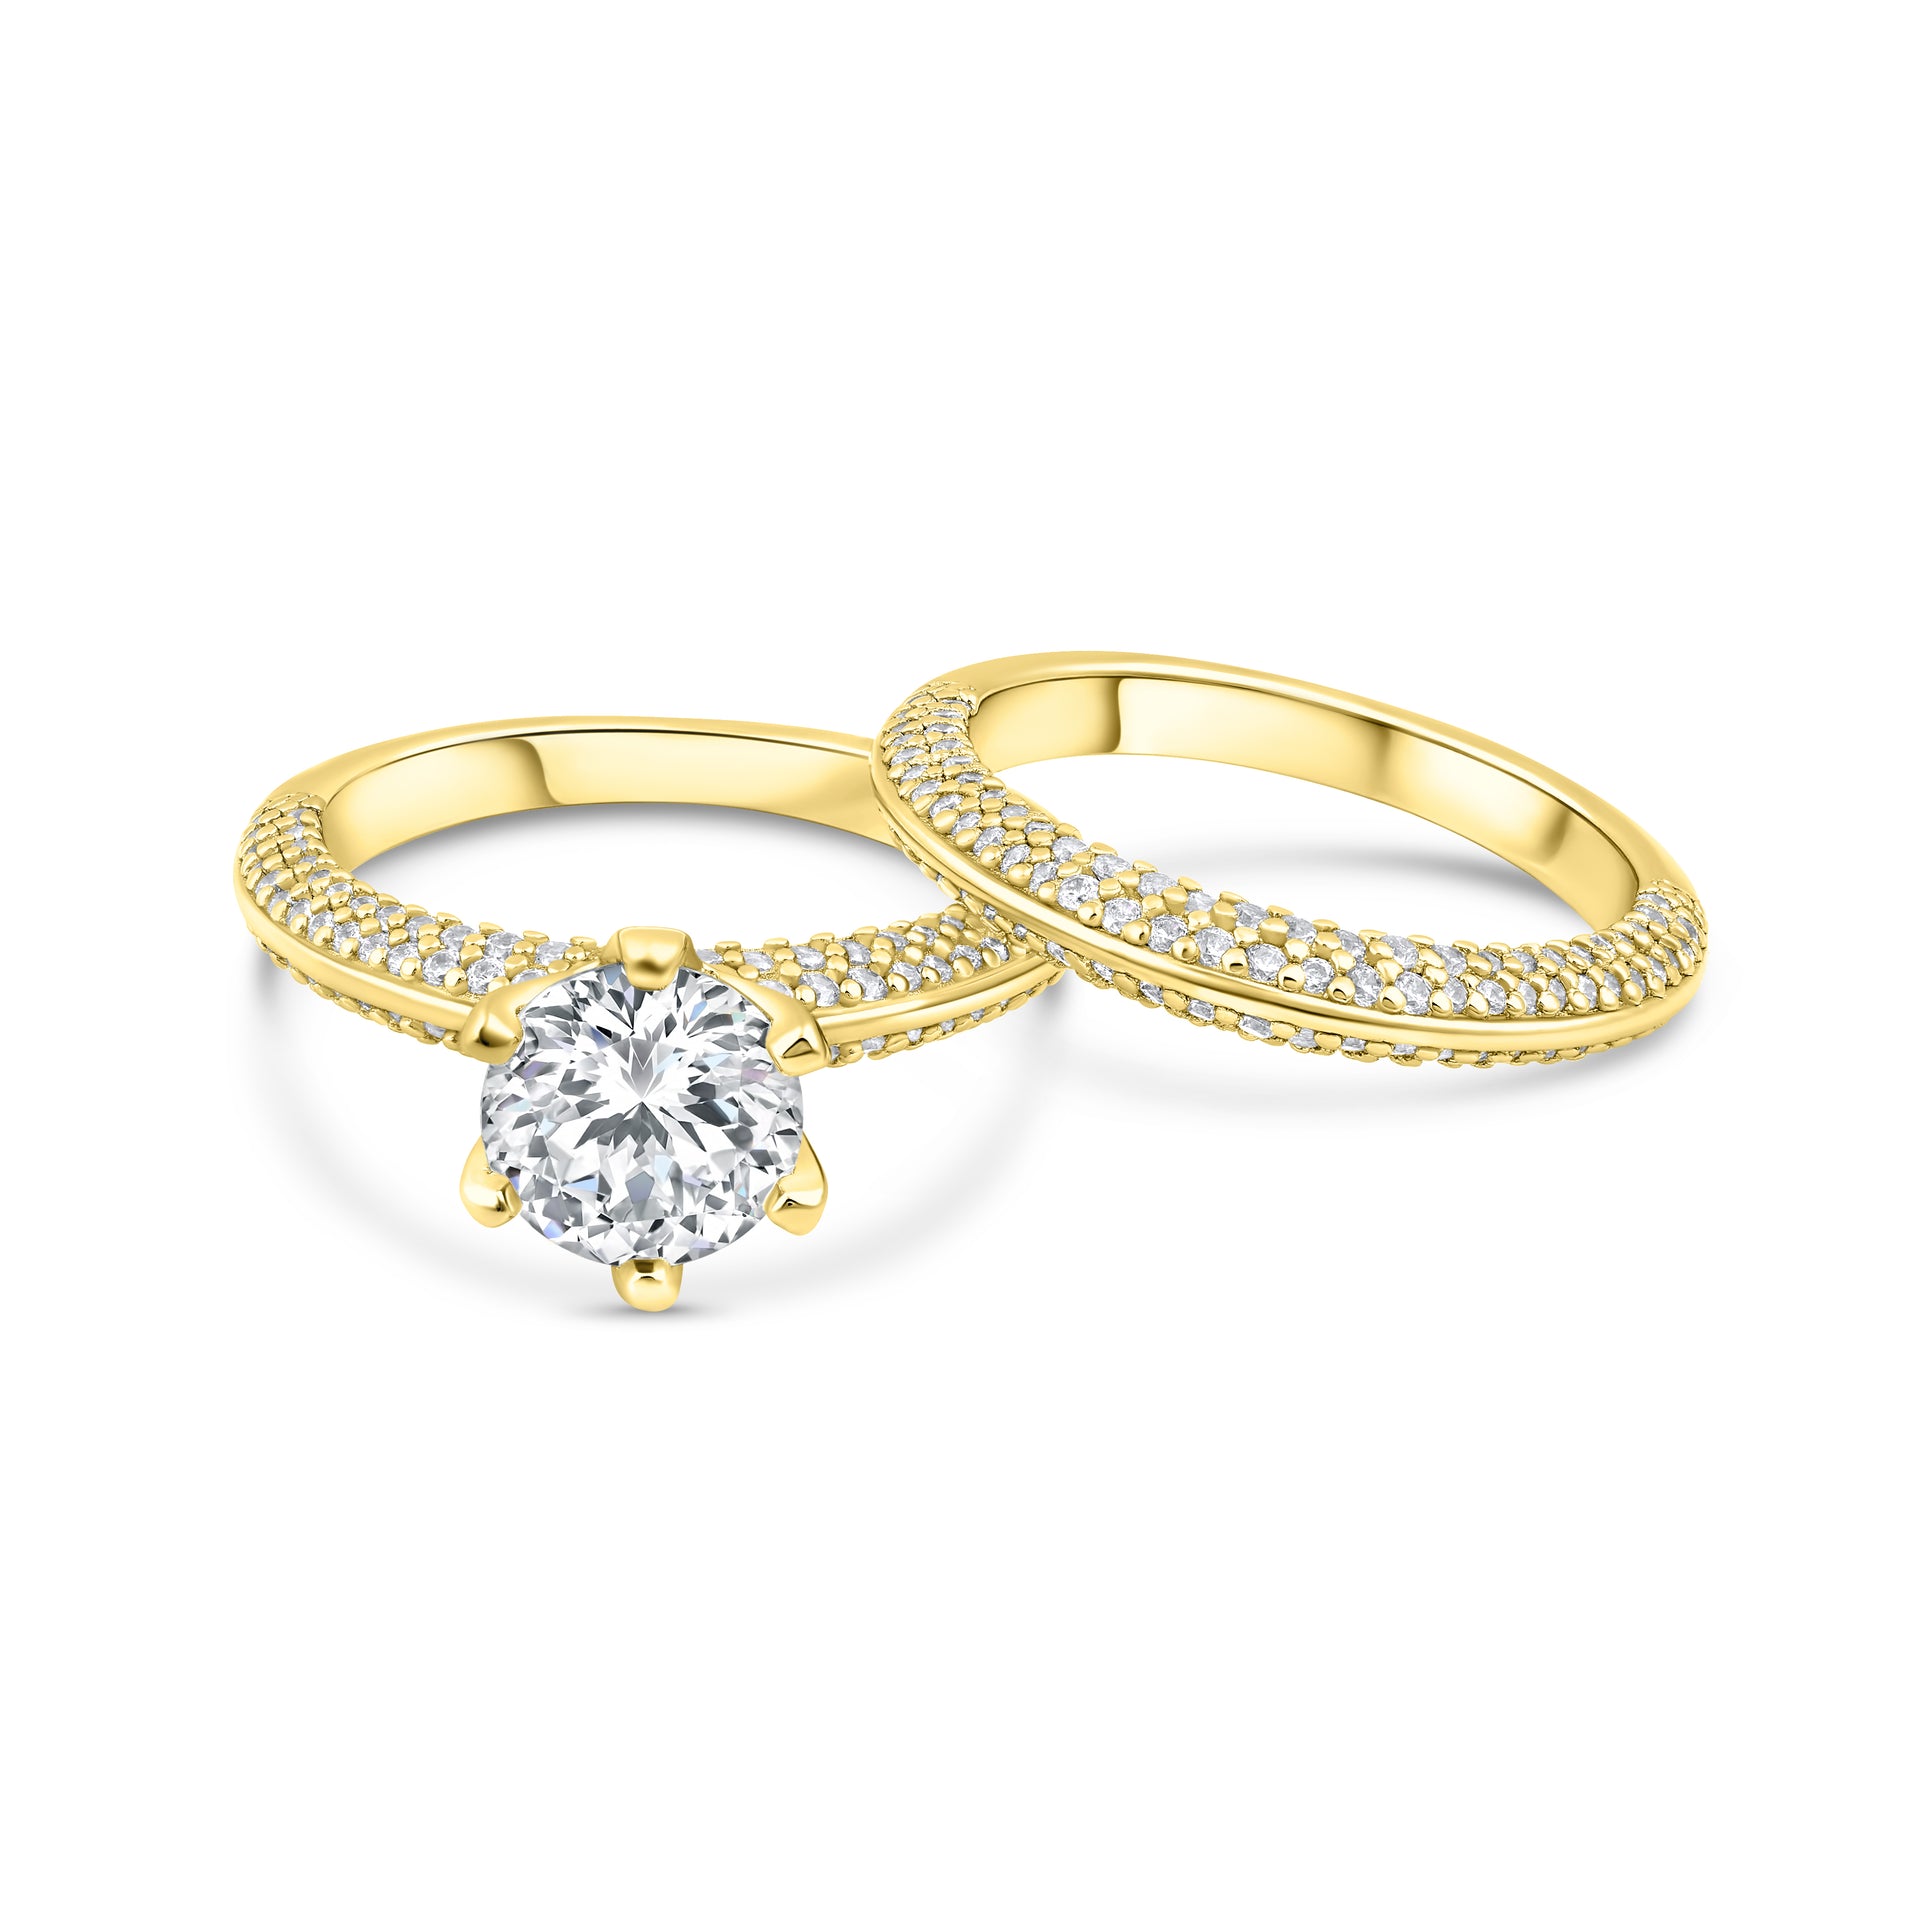 Bold and vintage 2 carat gold wedding ring set